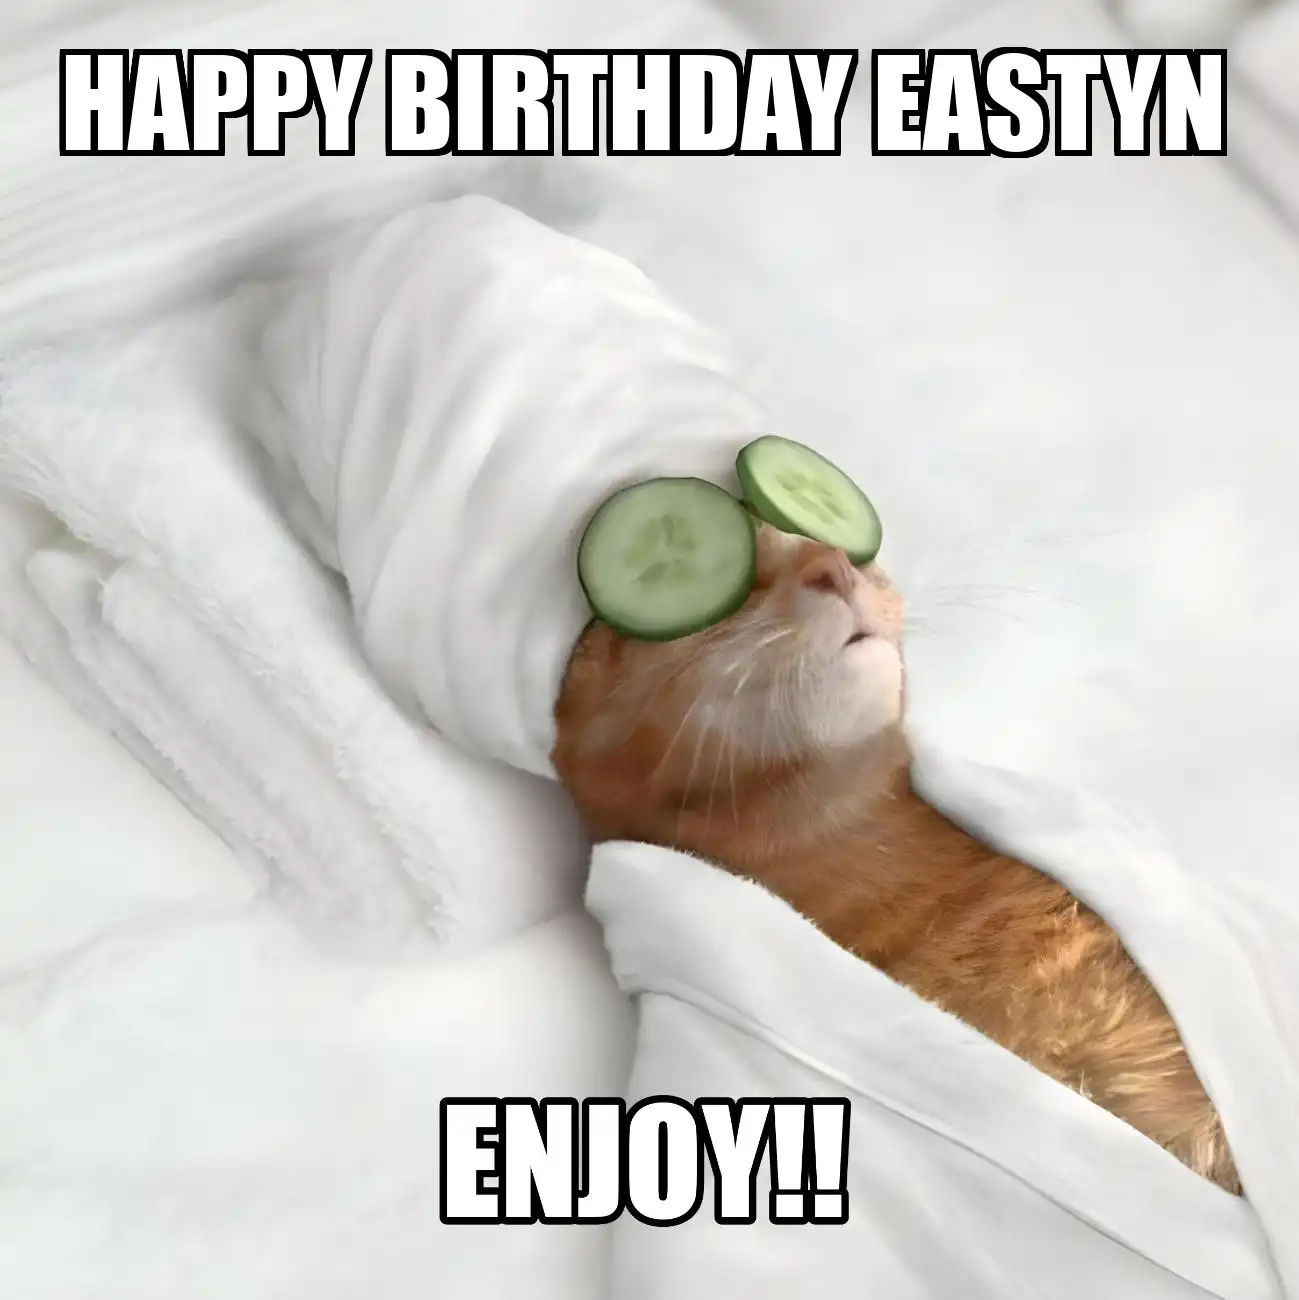 Happy Birthday Eastyn Enjoy Cat Meme